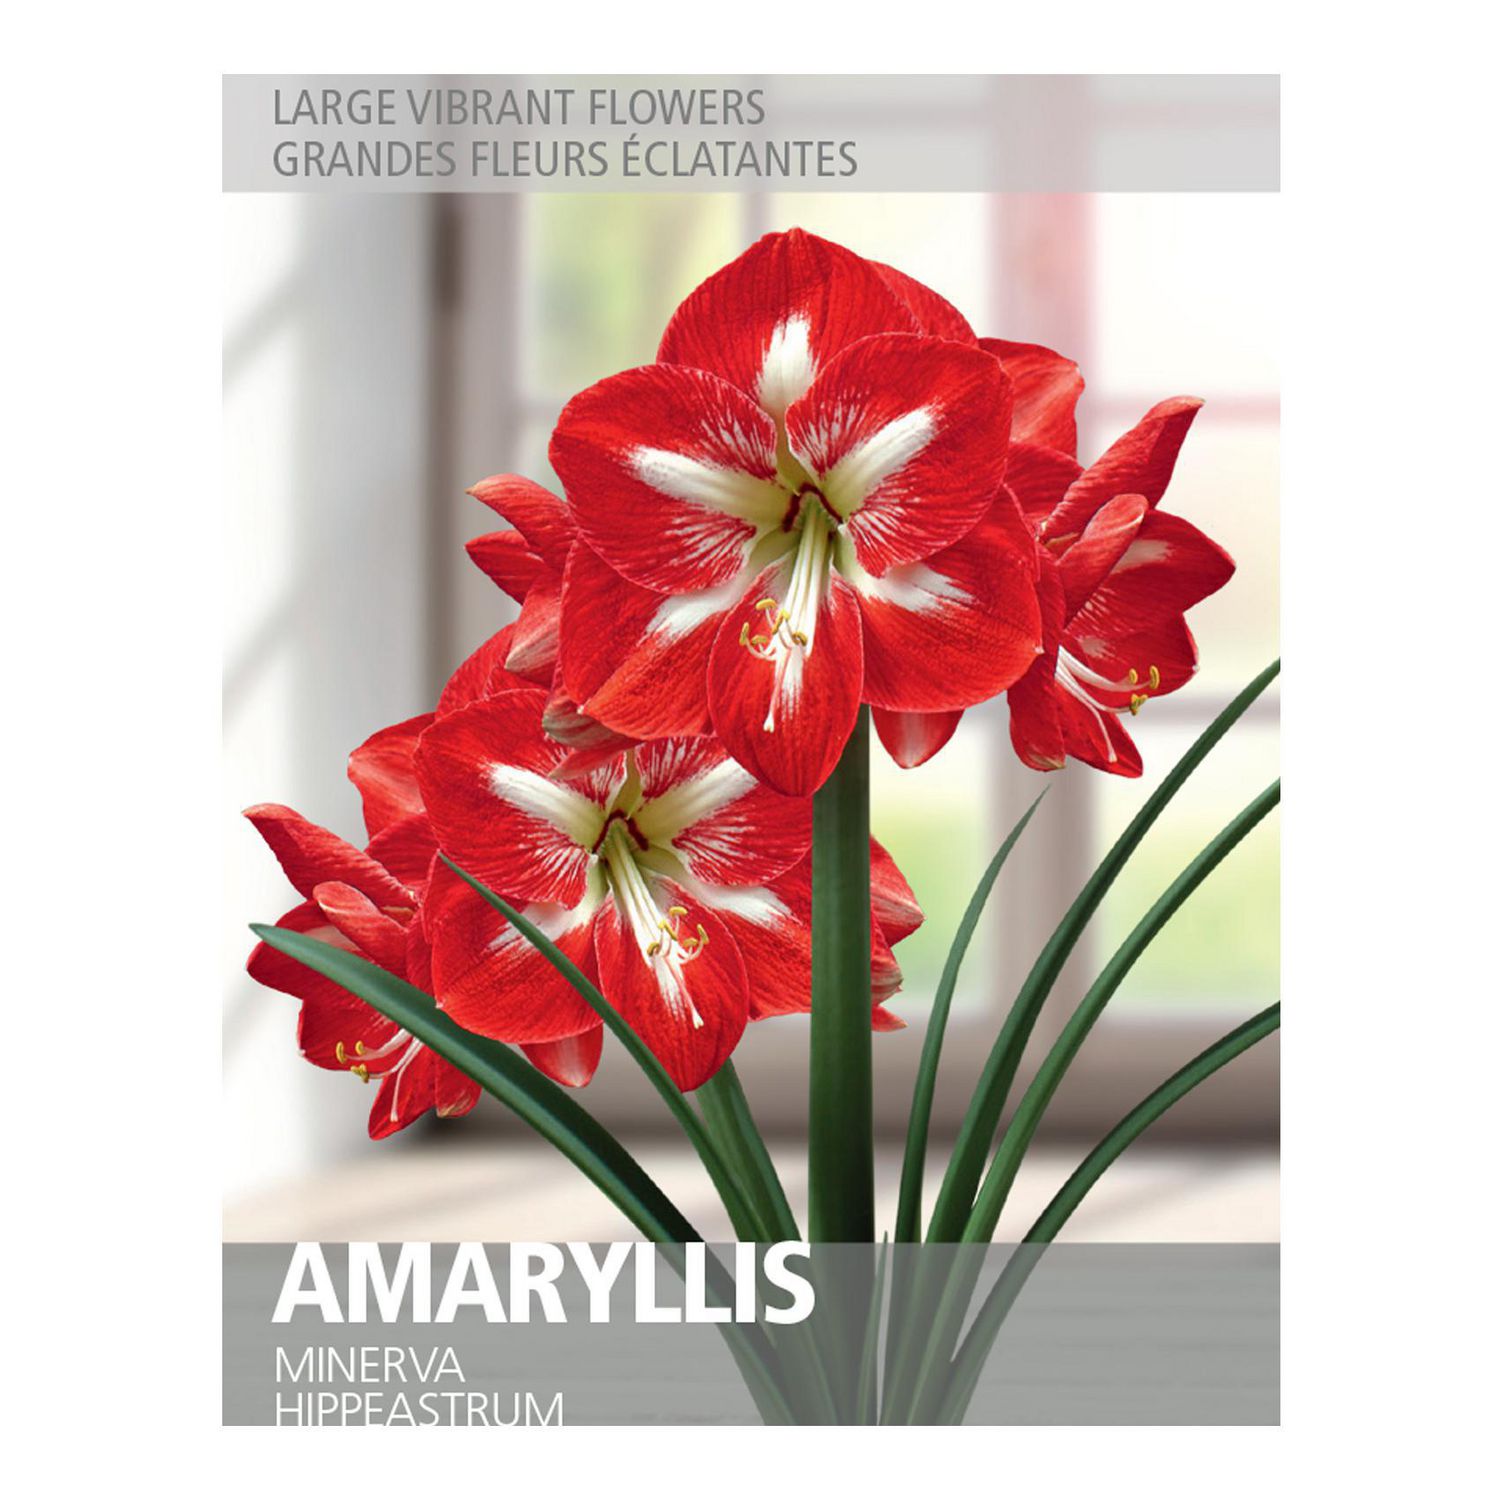 where to buy amaryllis bulbs in canada